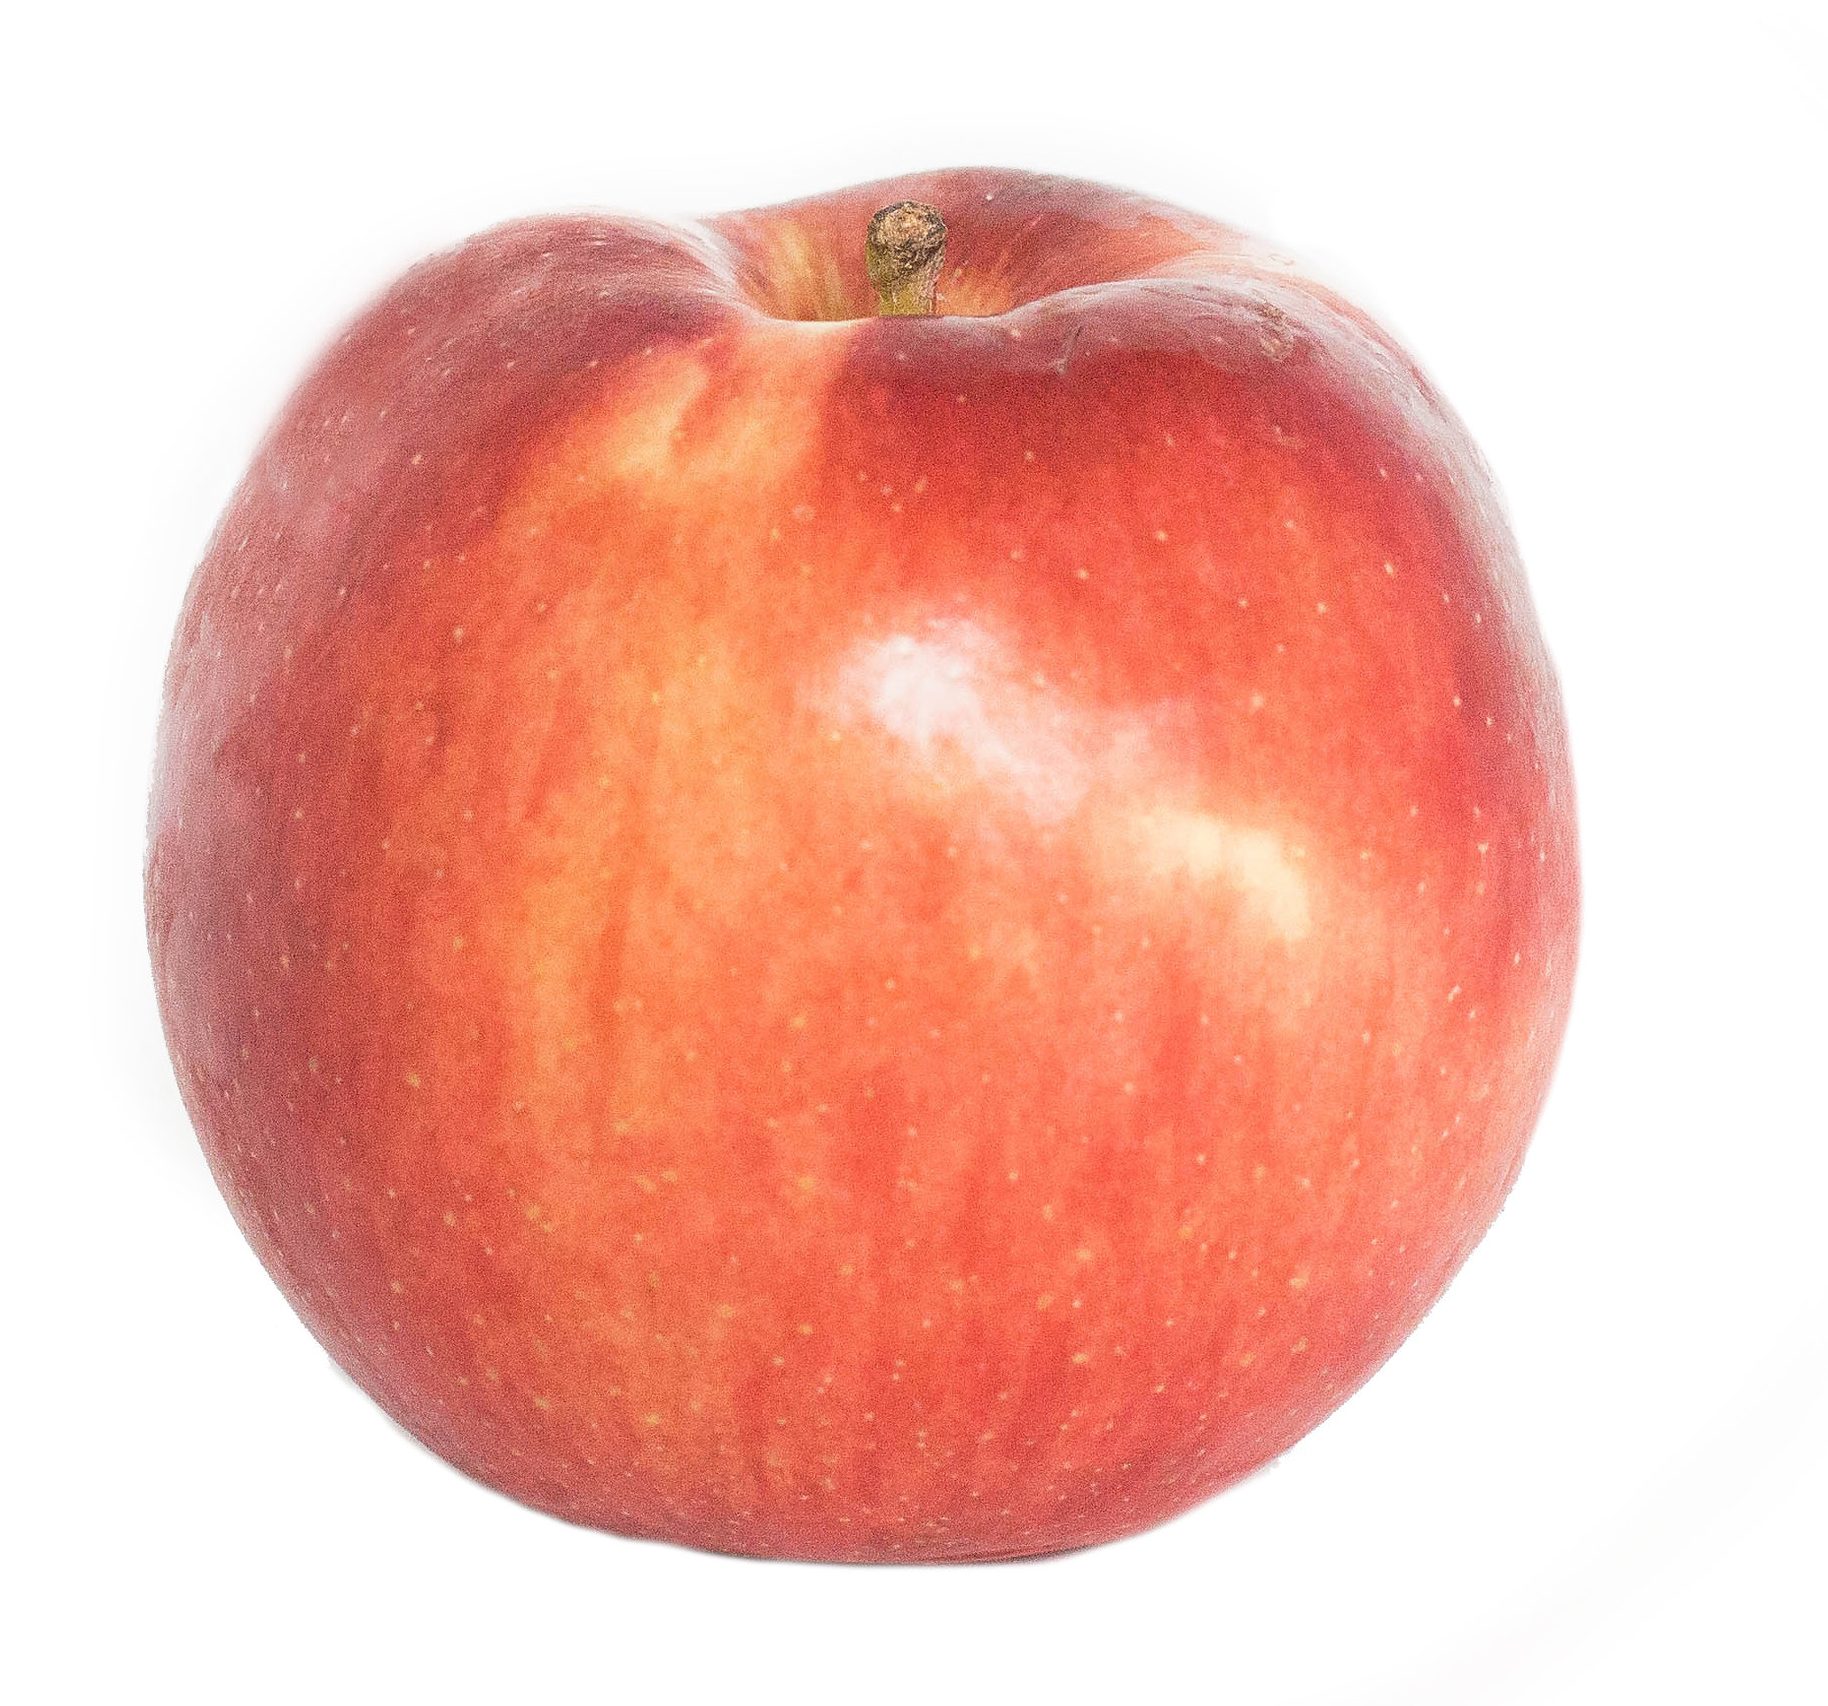 Gala Apples - Riveridge Produce Marketing, INC.